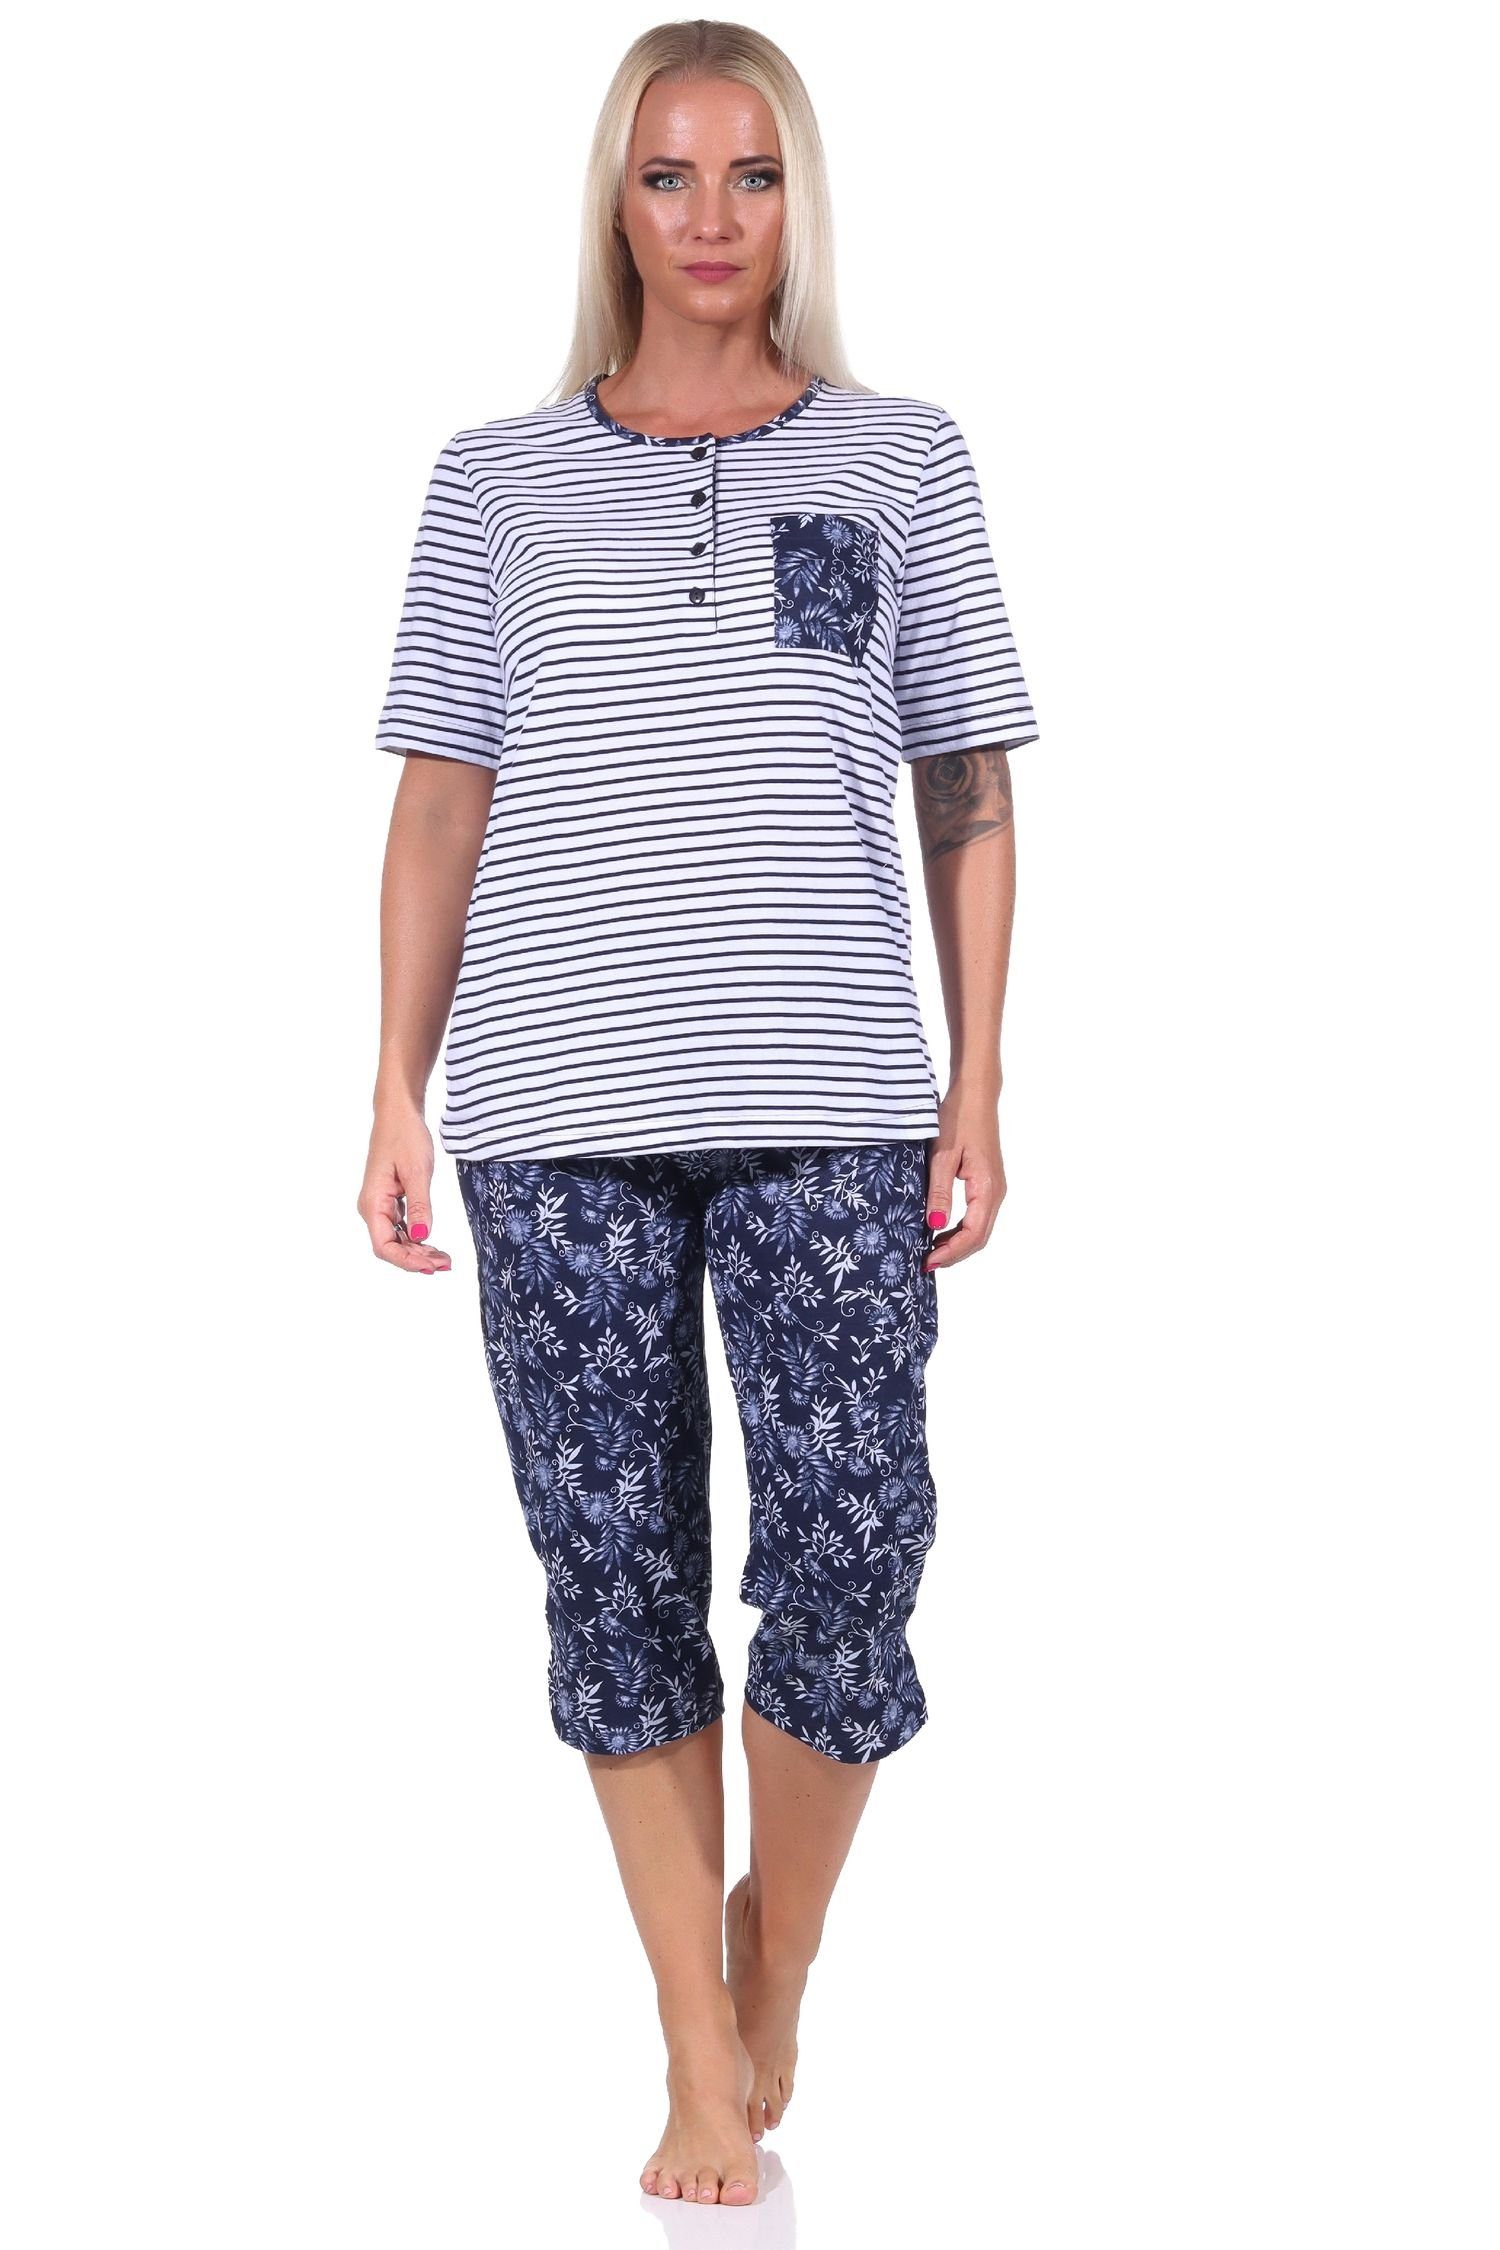 Damen geblümt Normann Oberteil Schlafanzug Hose kurzarm, Capri Pyjama gestreift,